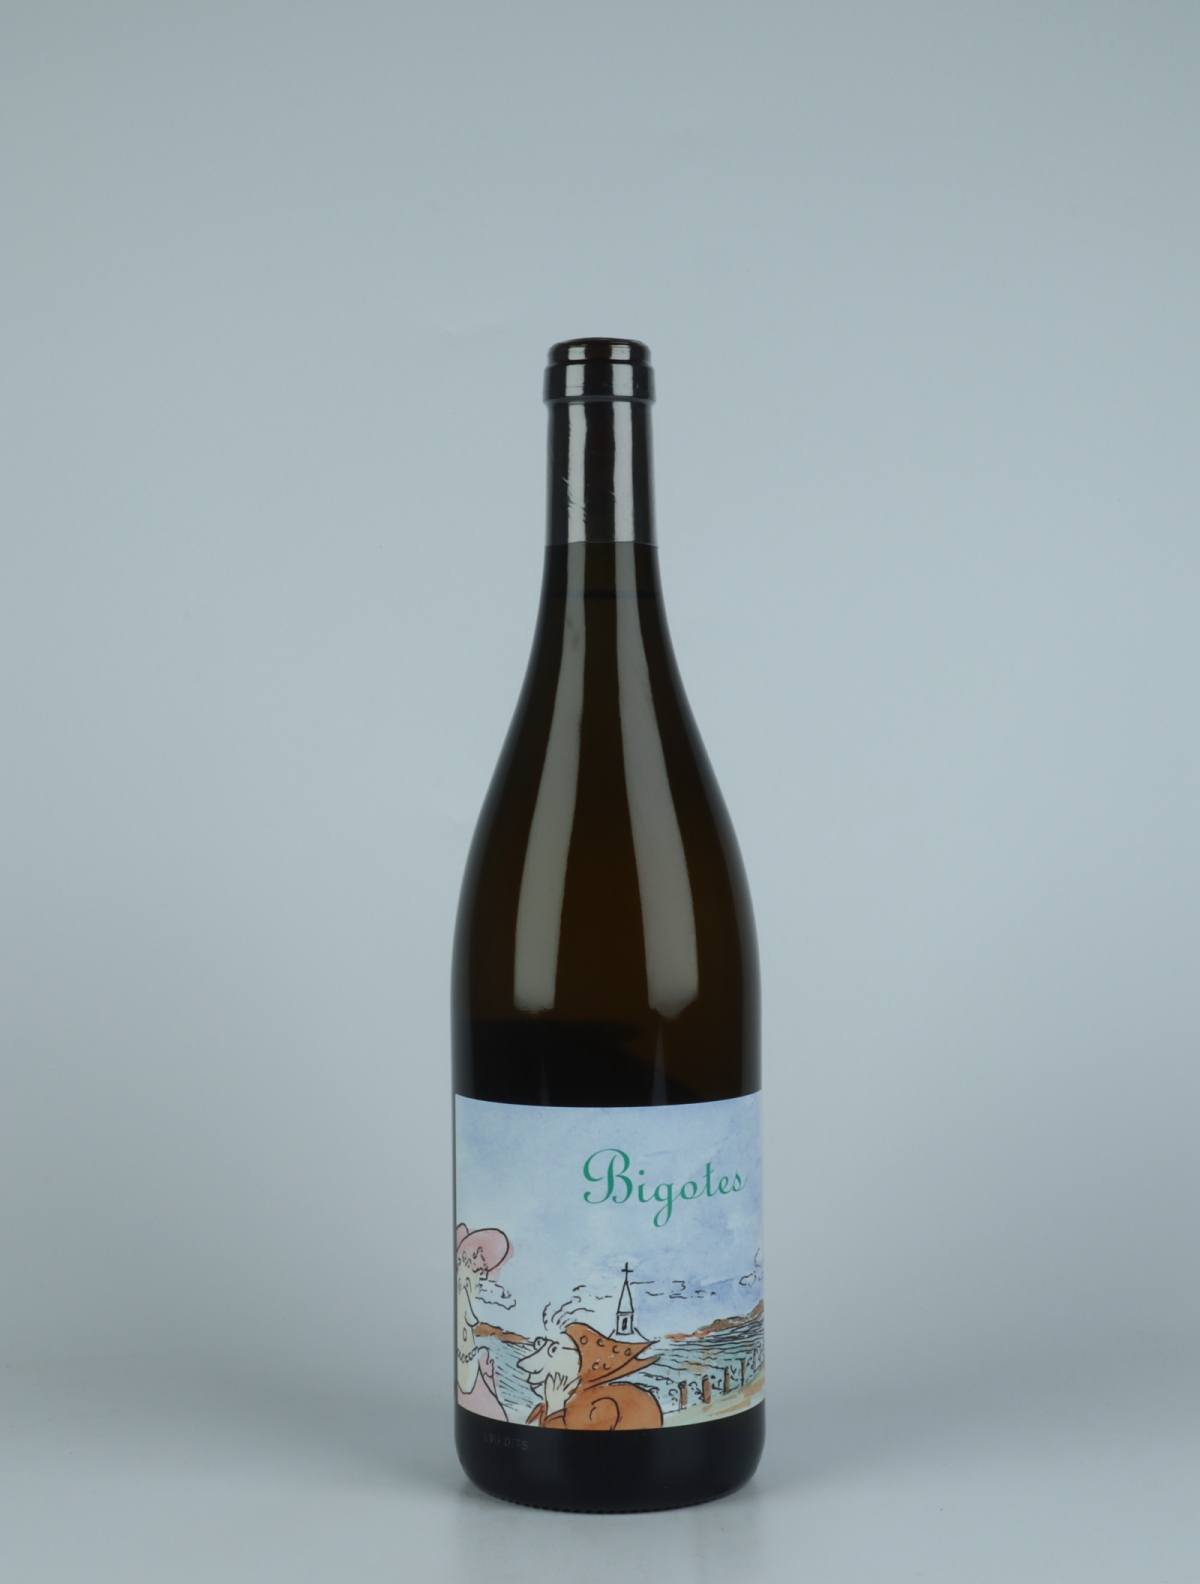 A bottle 2018 Bourgogne Blanc - Bigotes - Qvevris White wine from Frédéric Cossard, Burgundy in France